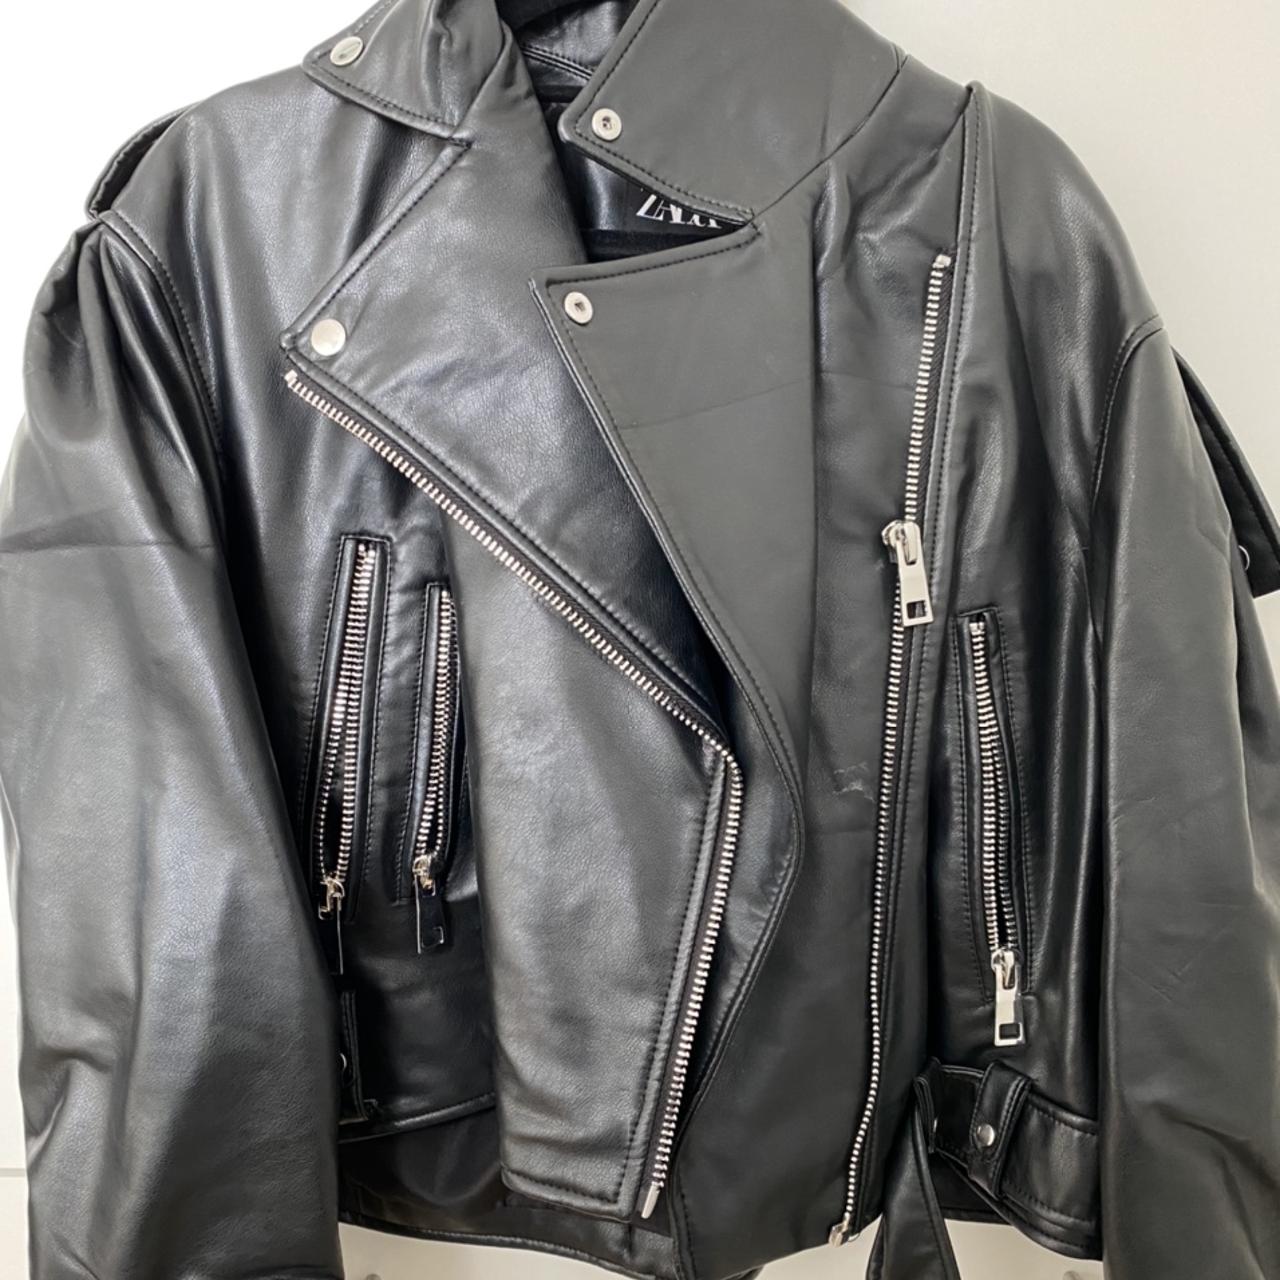 Zara black faux leather jacket originally $100 worn... - Depop